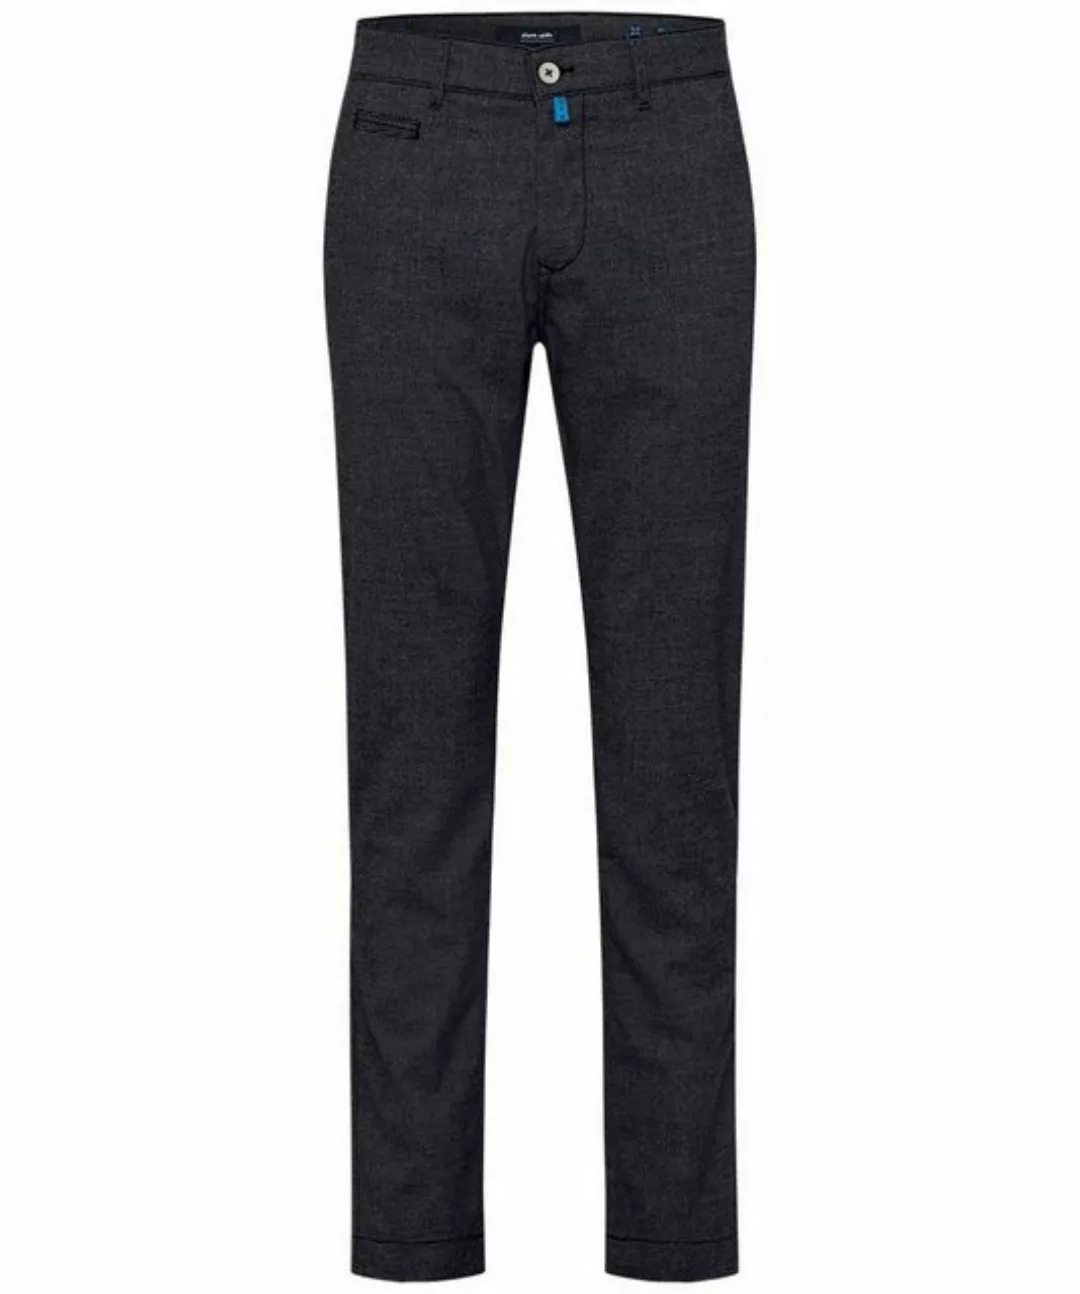 Pierre Cardin 5-Pocket-Jeans PIERRE CARDIN LYON TAPERED asphalt 33757 1012. günstig online kaufen